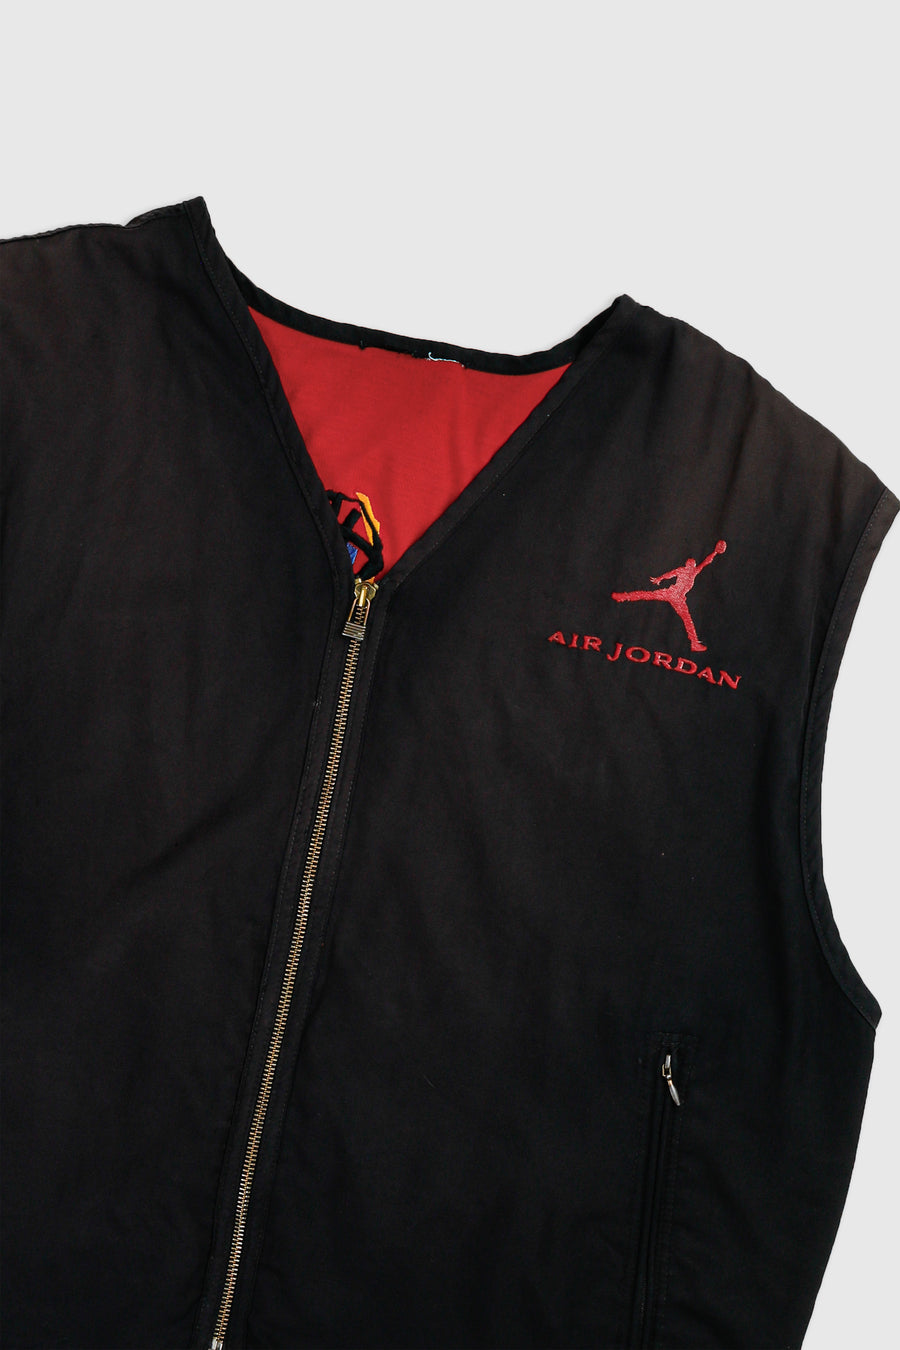 Vintage Nike Air Jordan Vest - XL